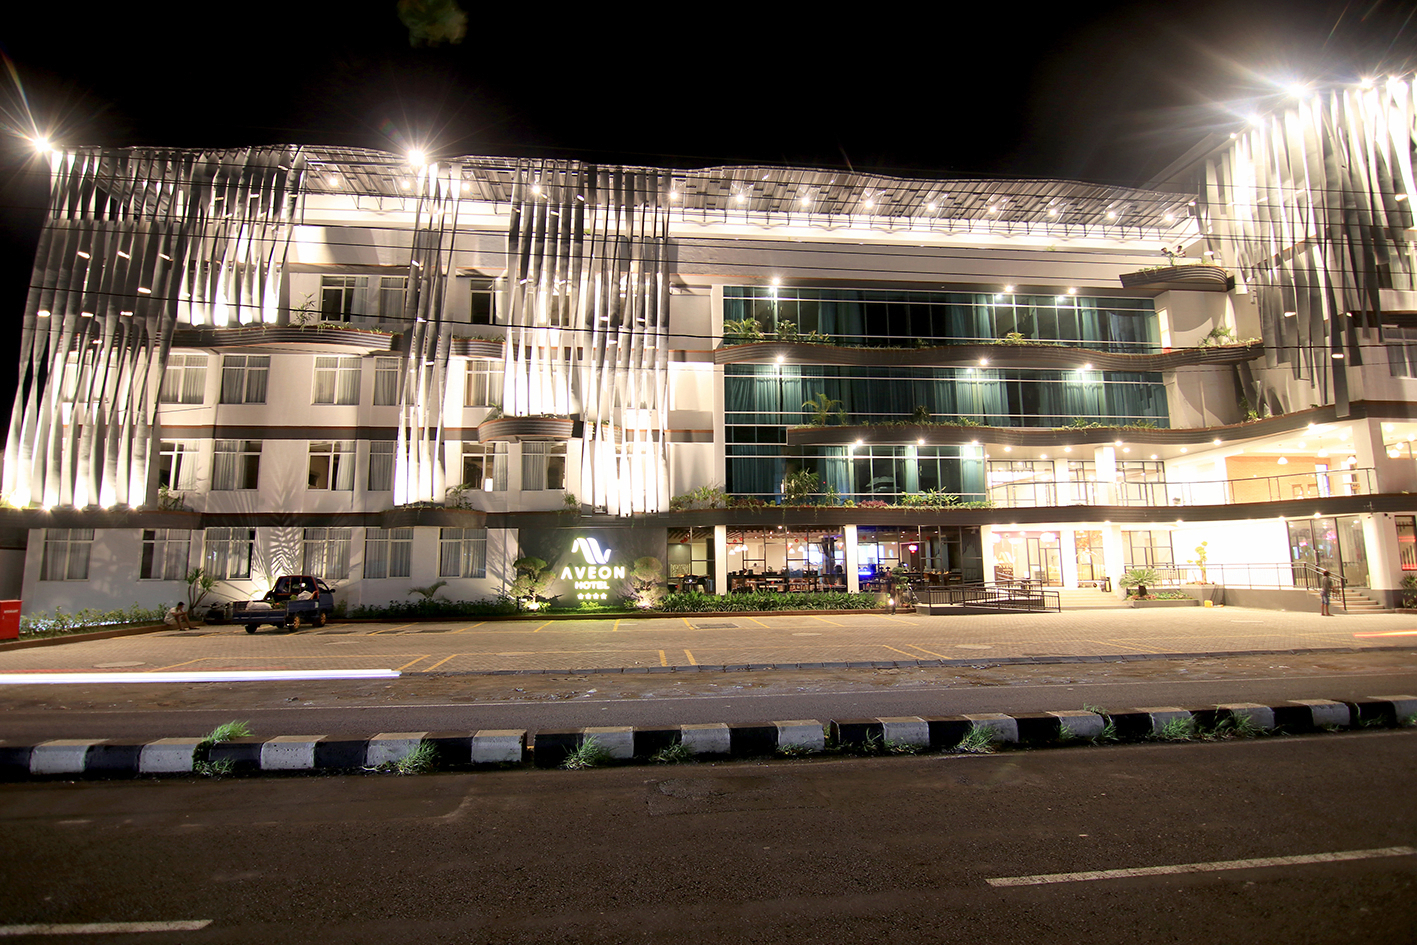 Exterior & Views 1, Aveon Hotel Yogyakarta by Daphna International, Yogyakarta